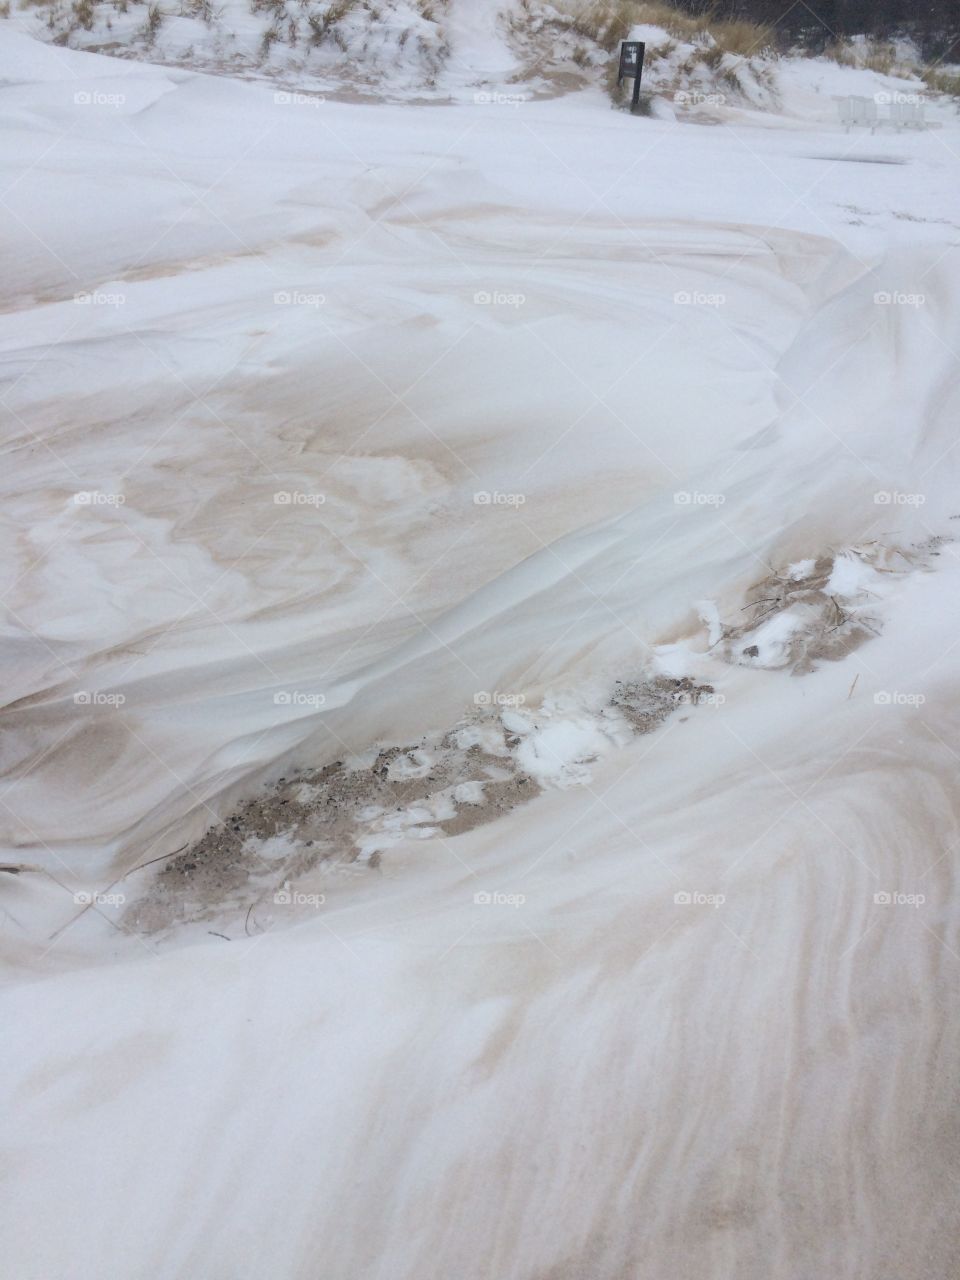 Snow/Ice/sand mix on beach